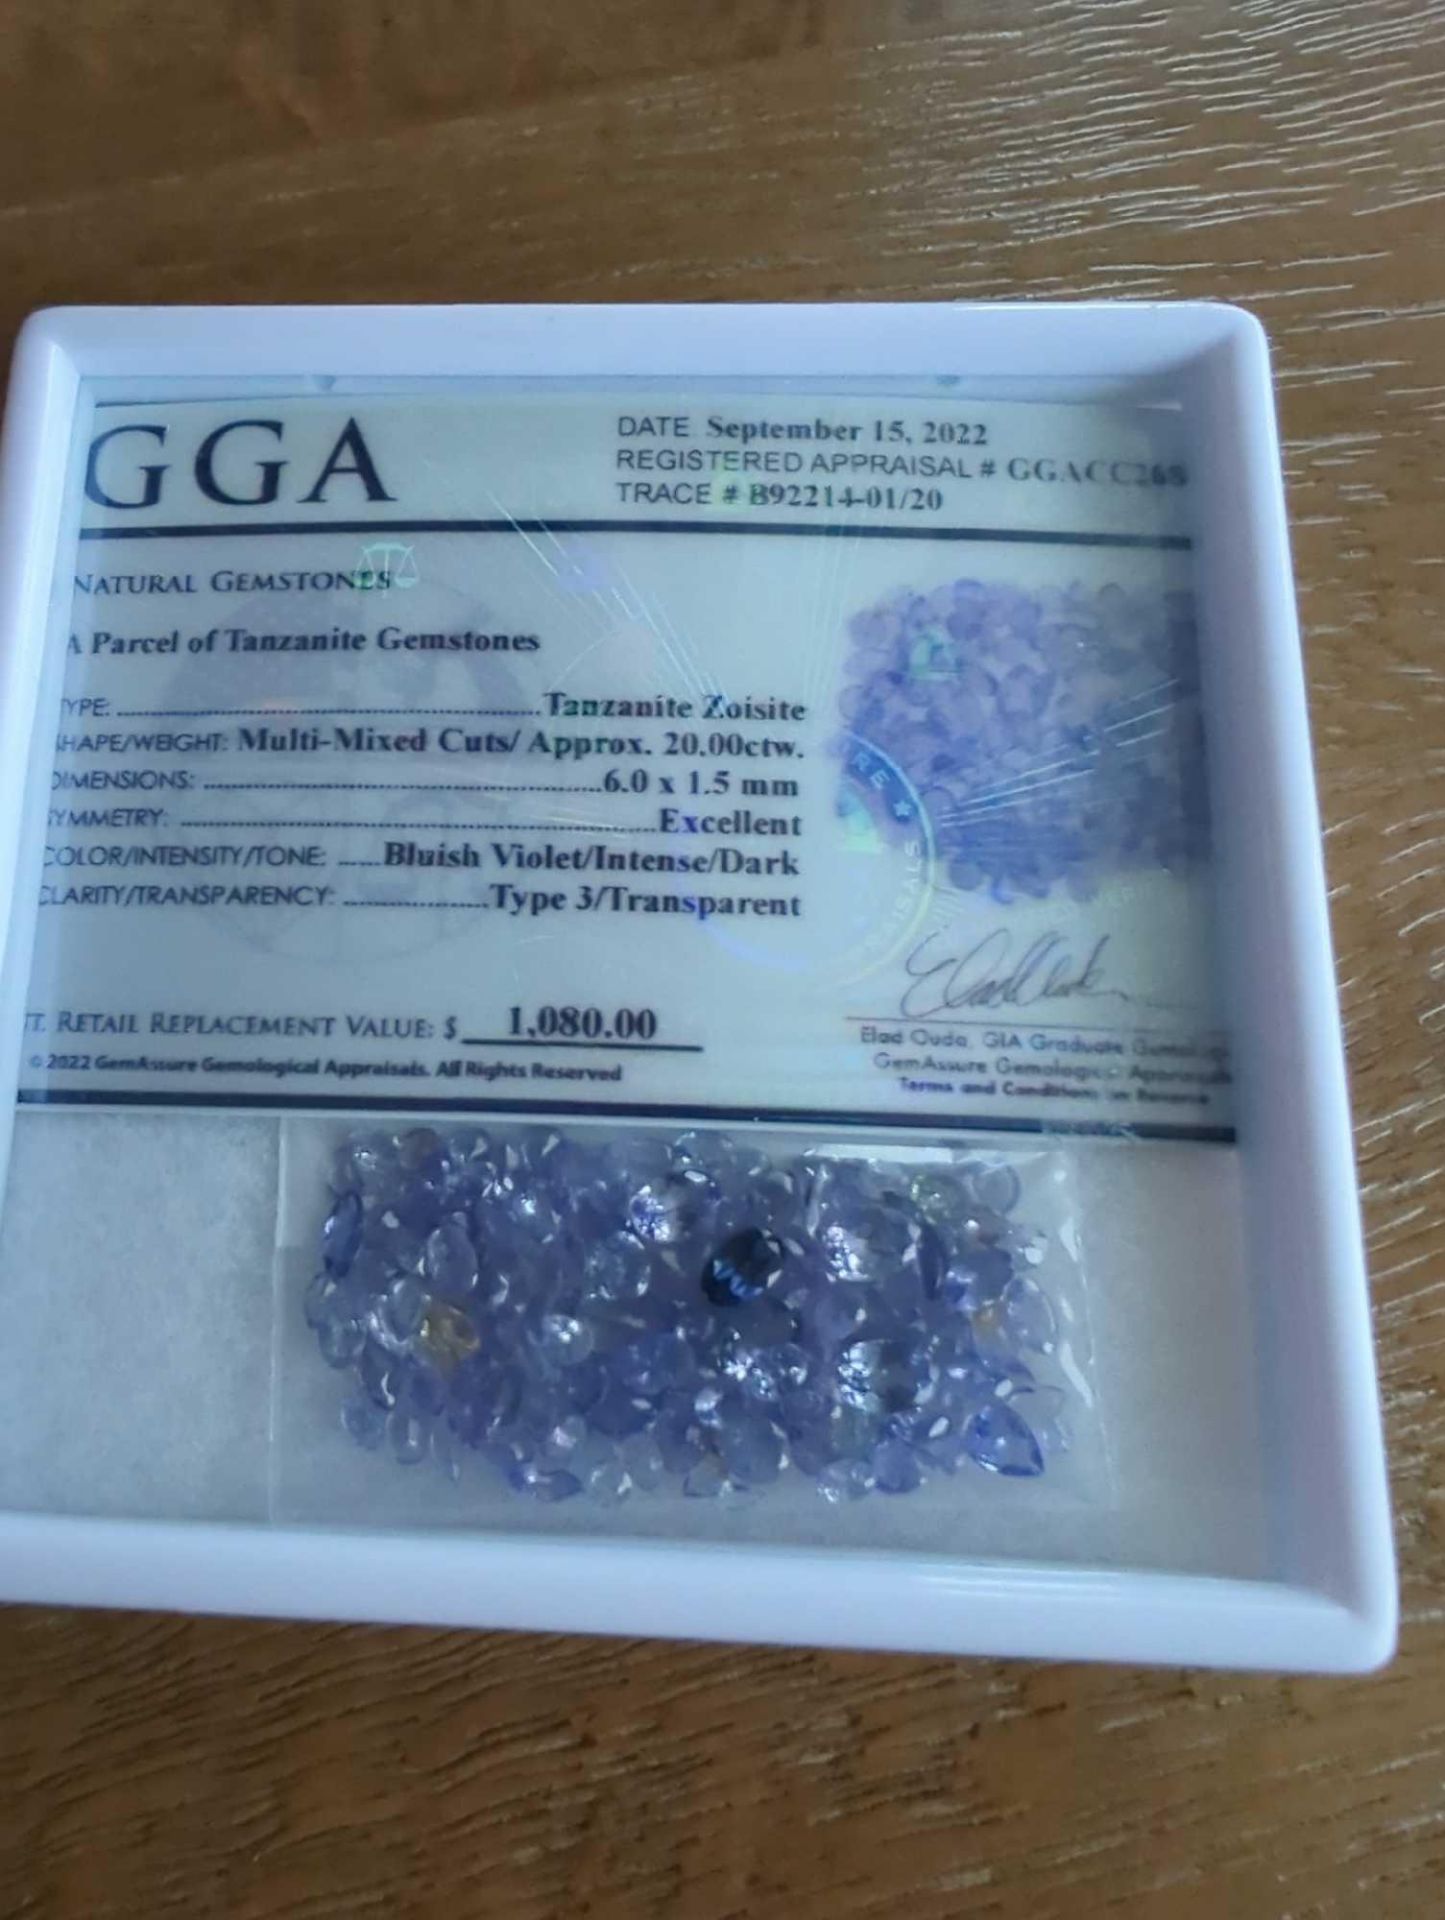 Loose tanzanite gemstones - Image 3 of 3